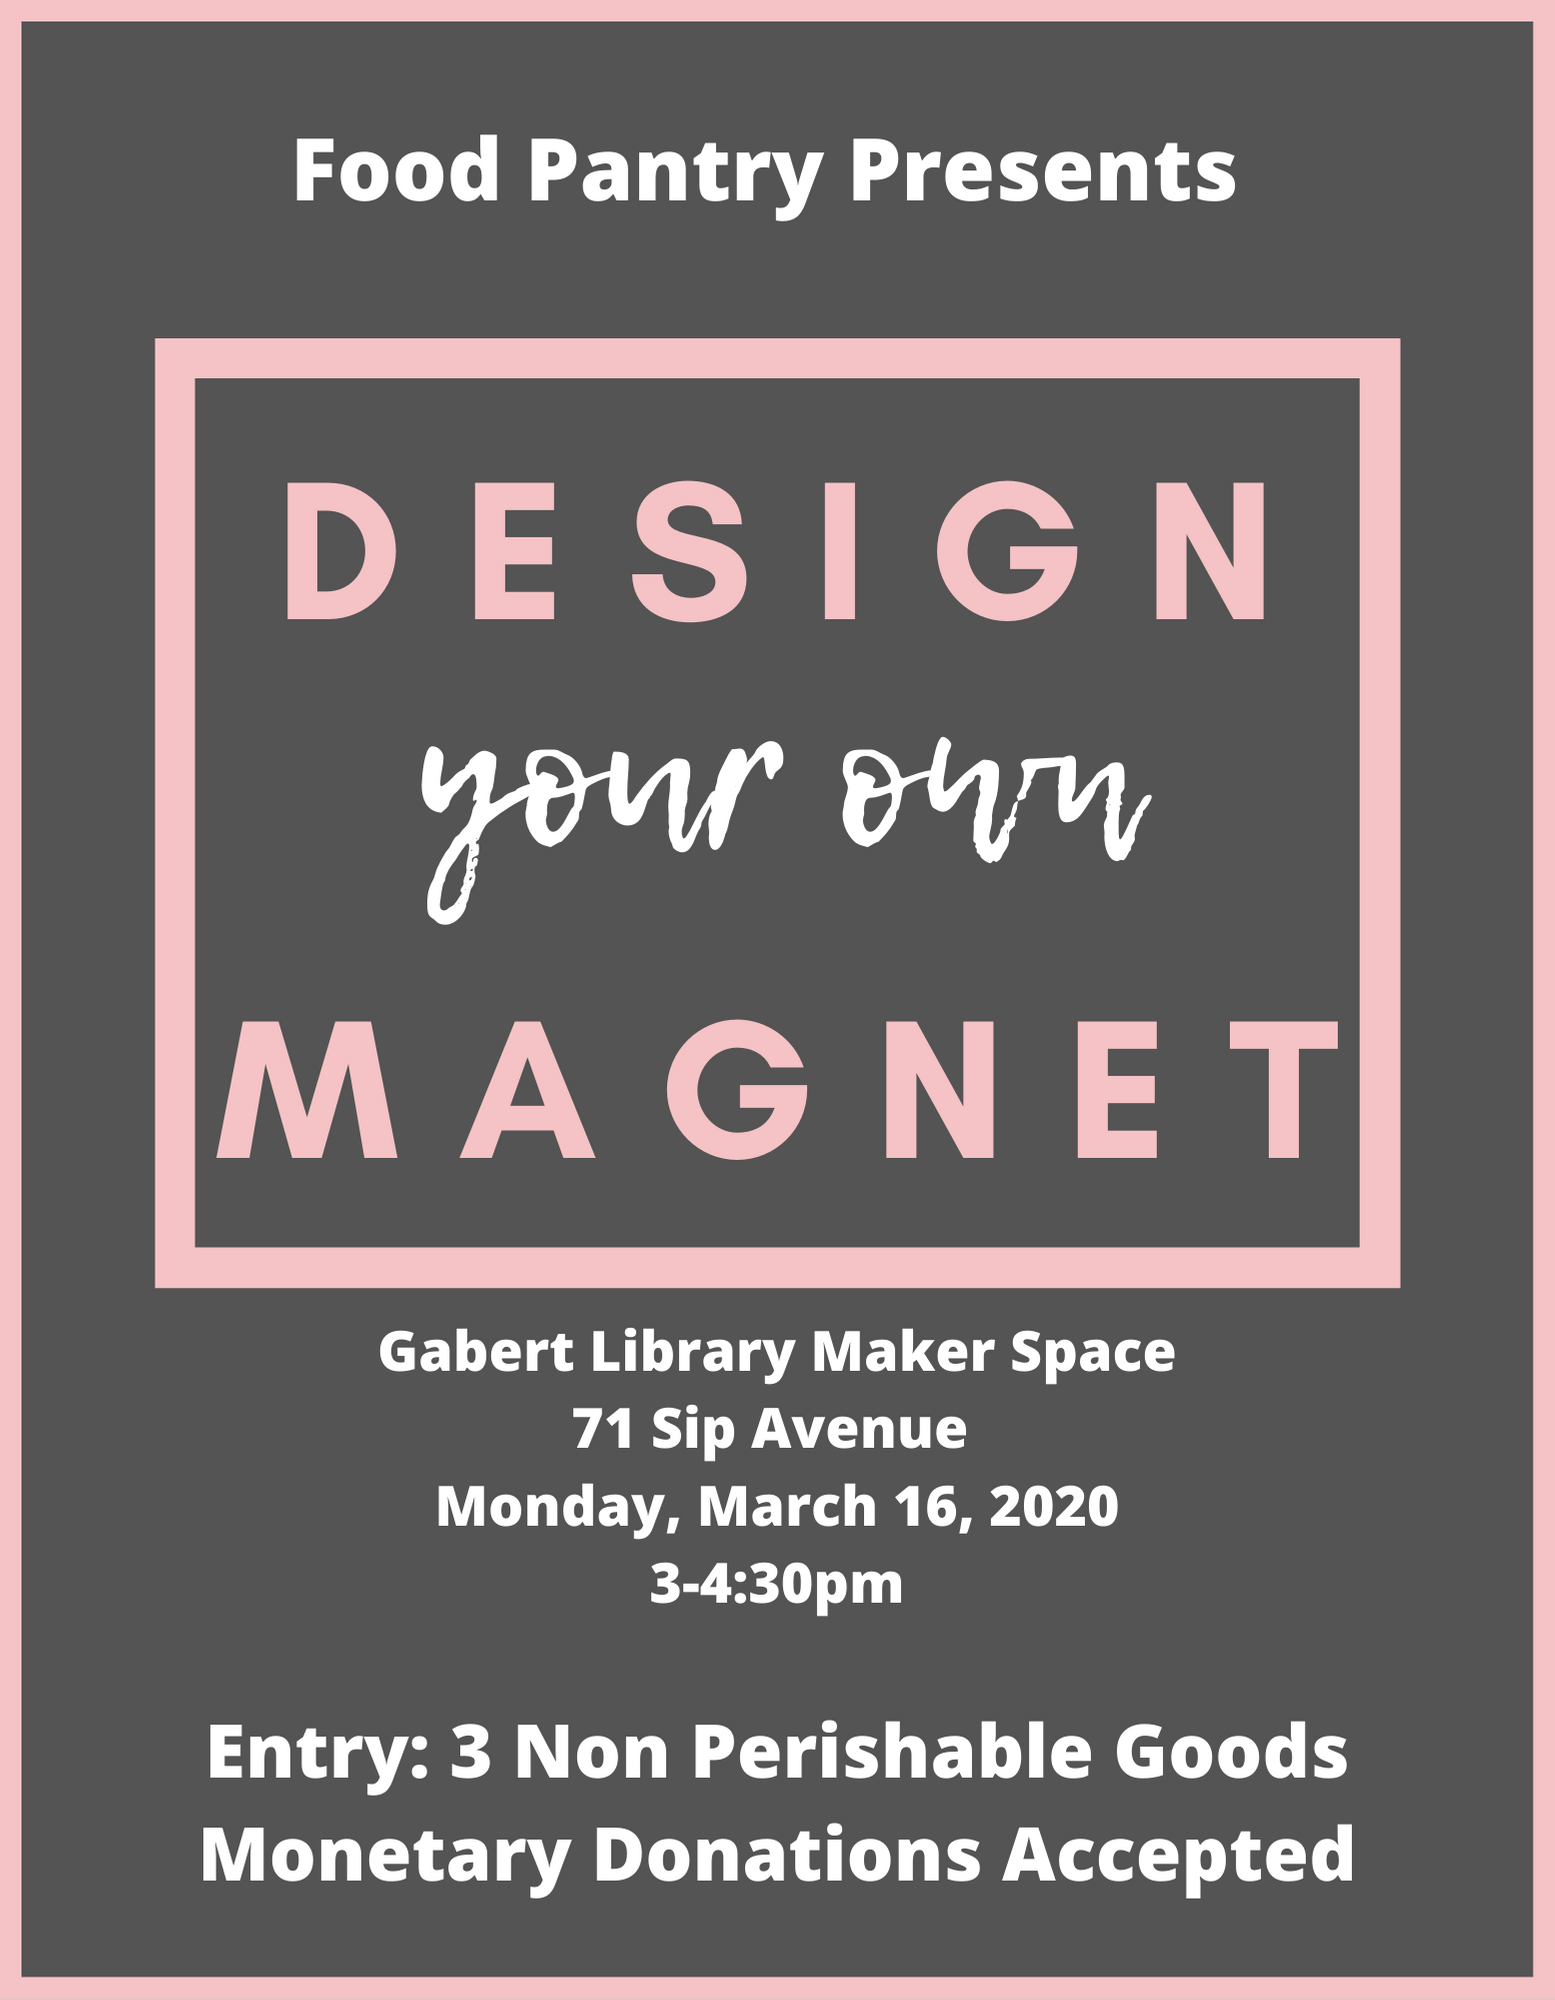 Design Your Own Magnet Flyer.